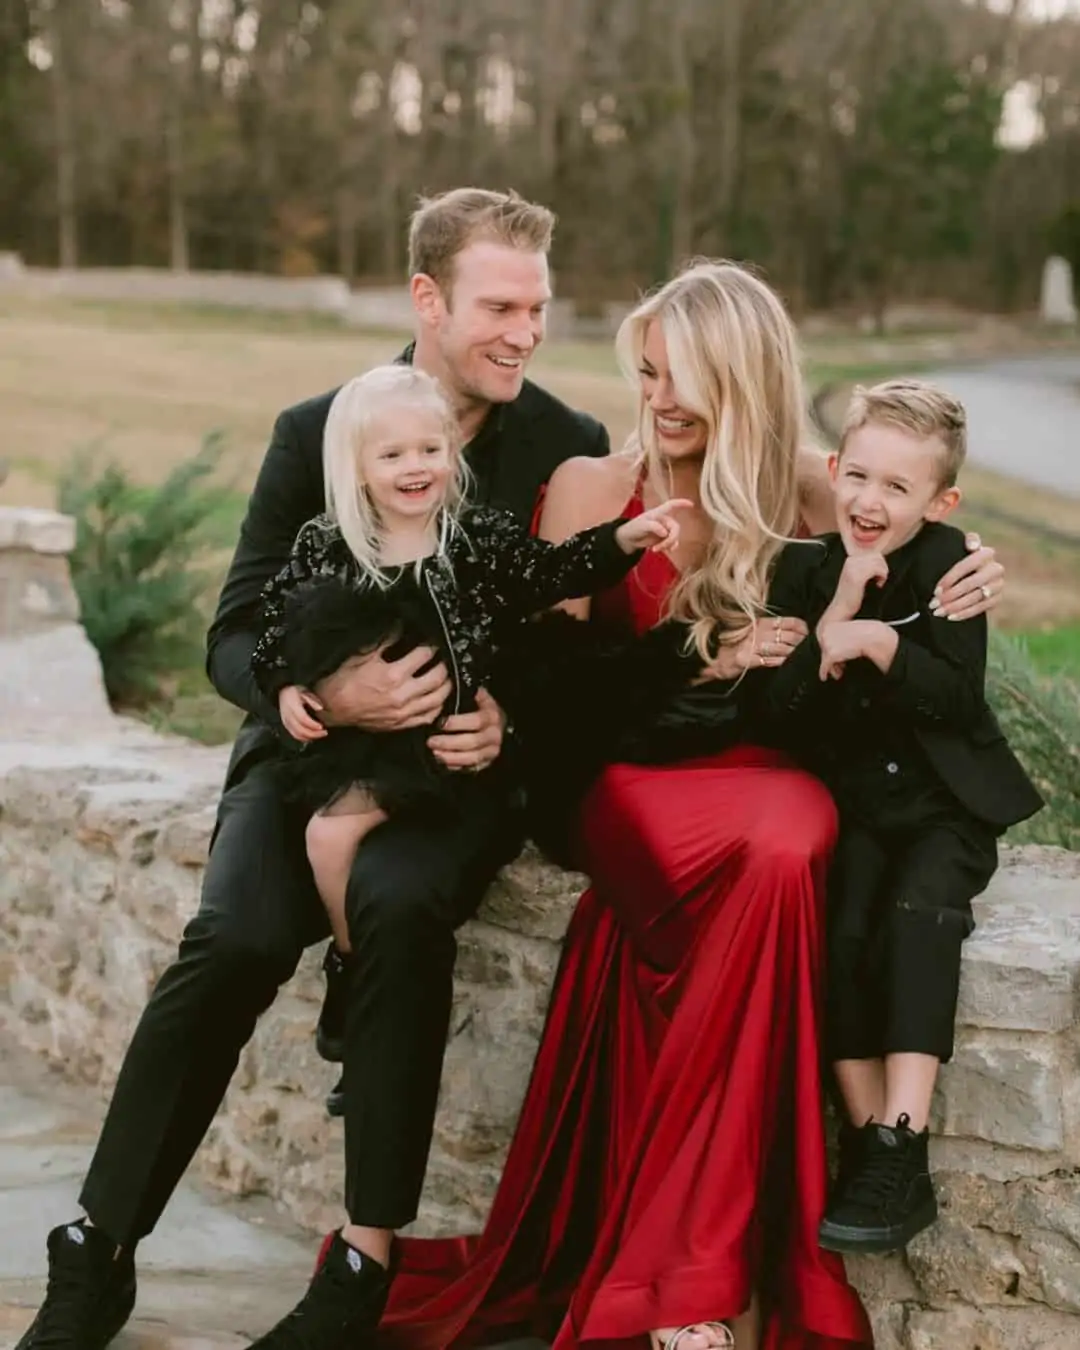 Lauren Tannehill and her husband, Ryan Tannehill, with their two children. (Source: Instagram @laurentannehill)